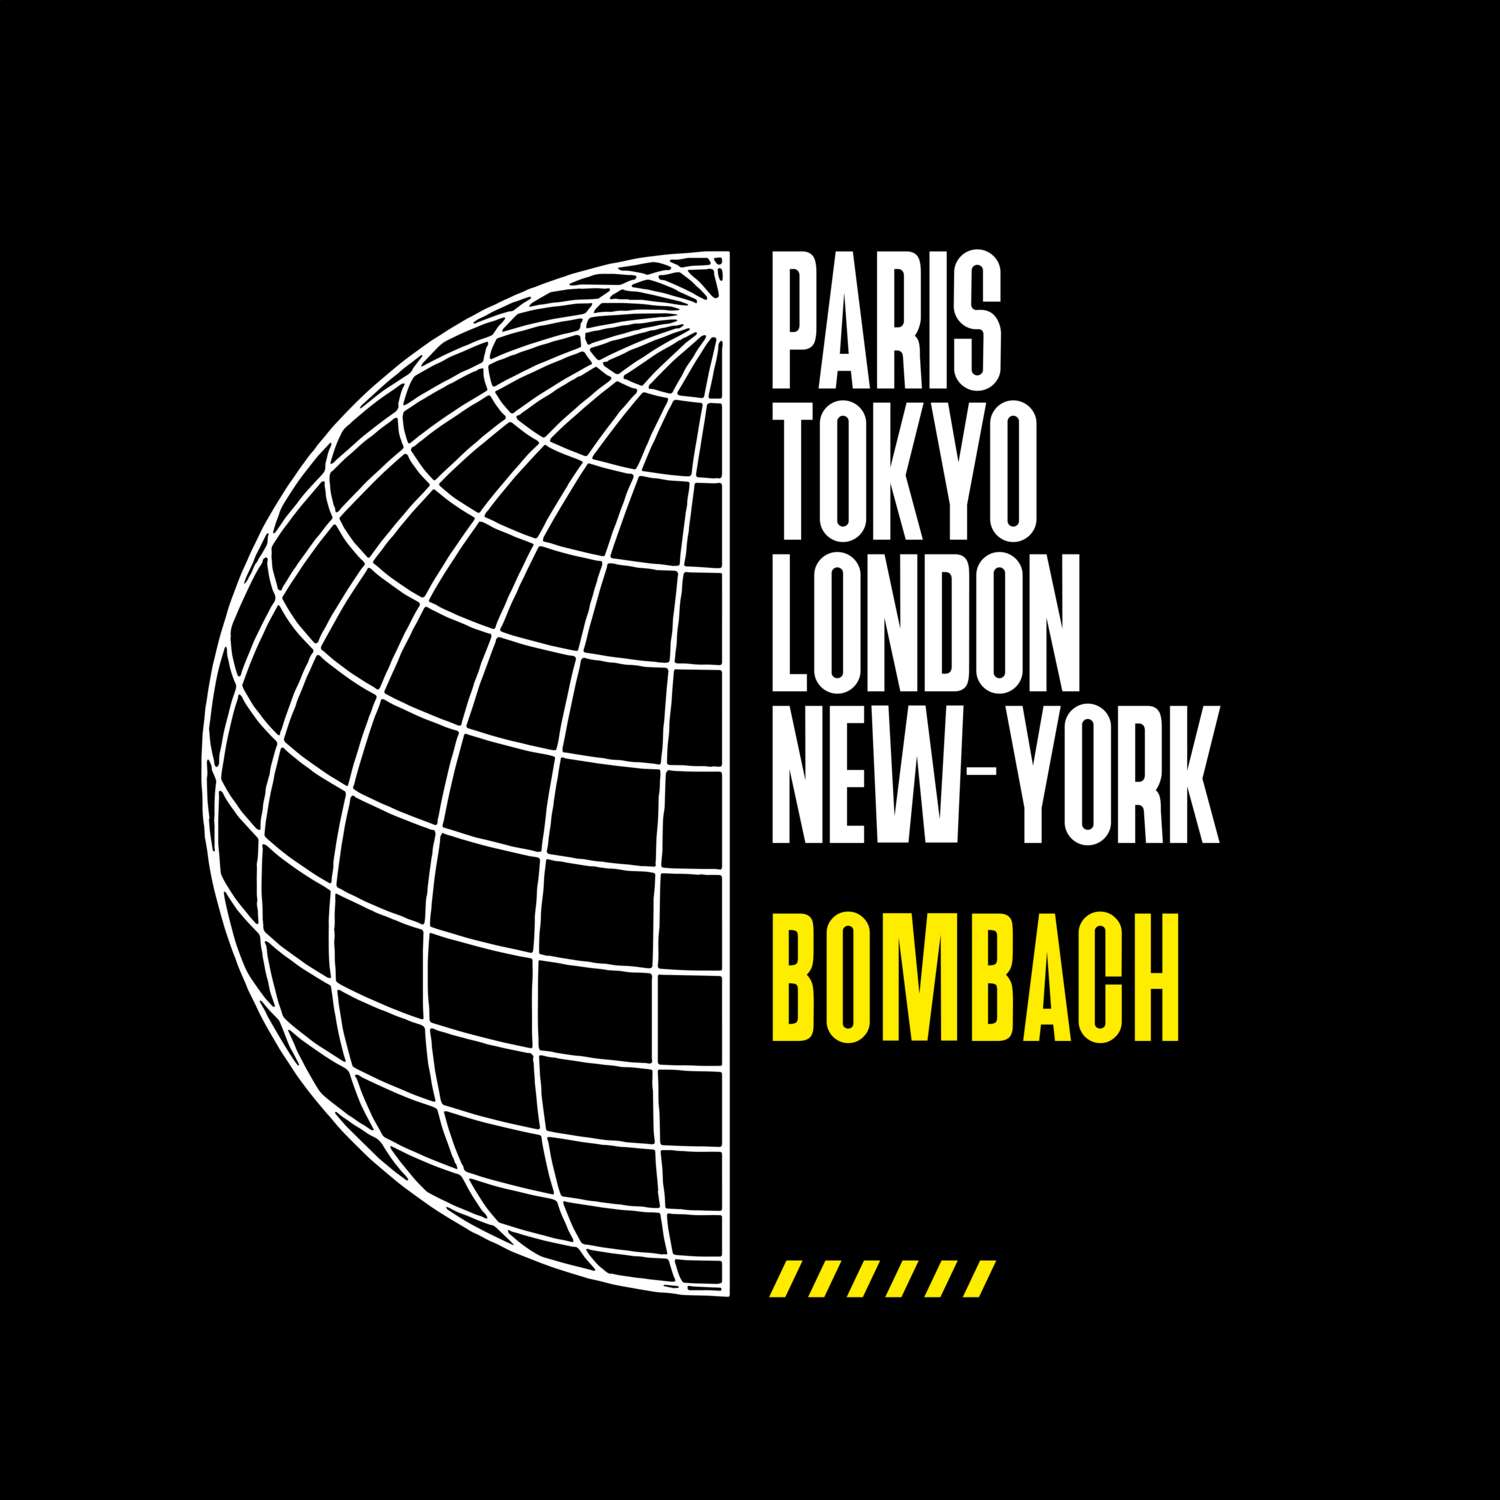 Bombach T-Shirt »Paris Tokyo London«